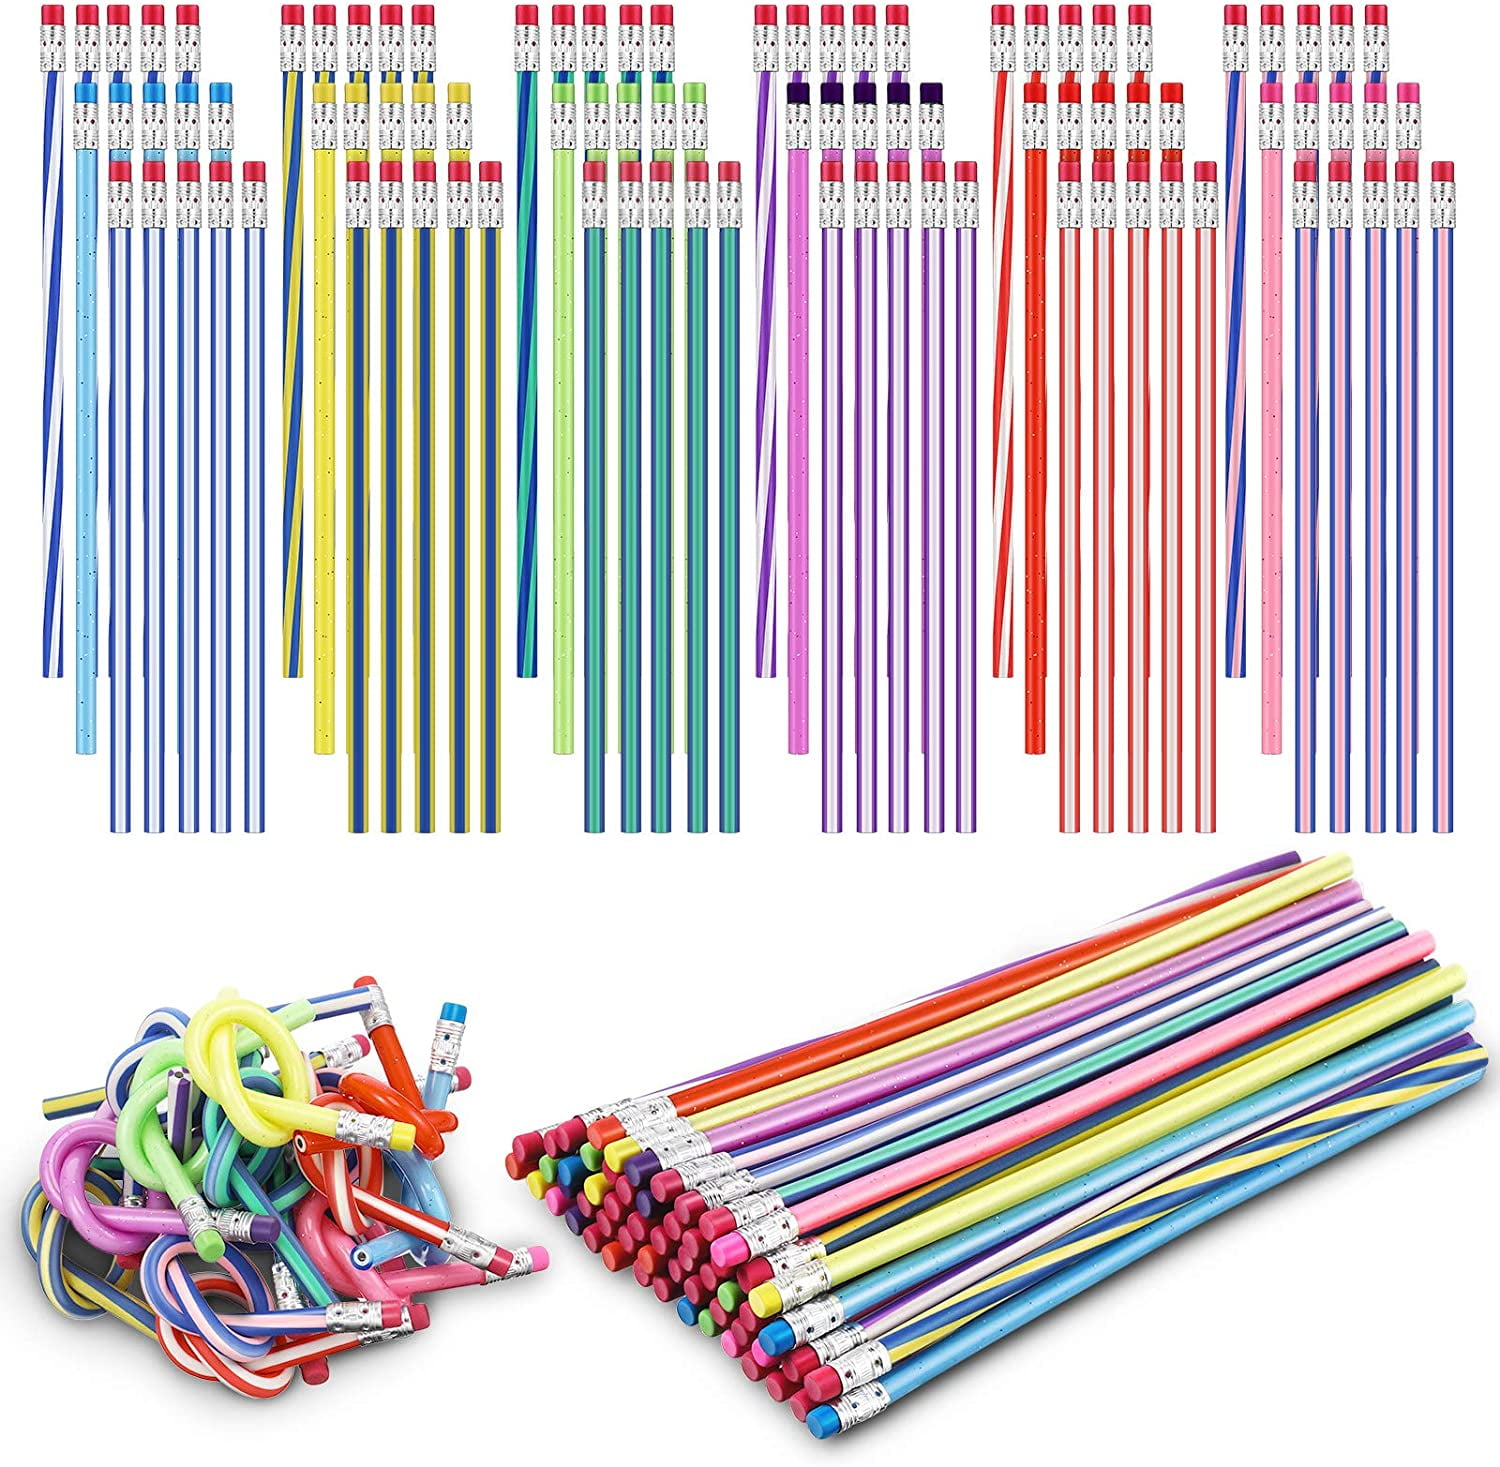 6 pieces Magic Bendy Flexible Pencil Soft w/ Eraser Colorful Fun Student School 